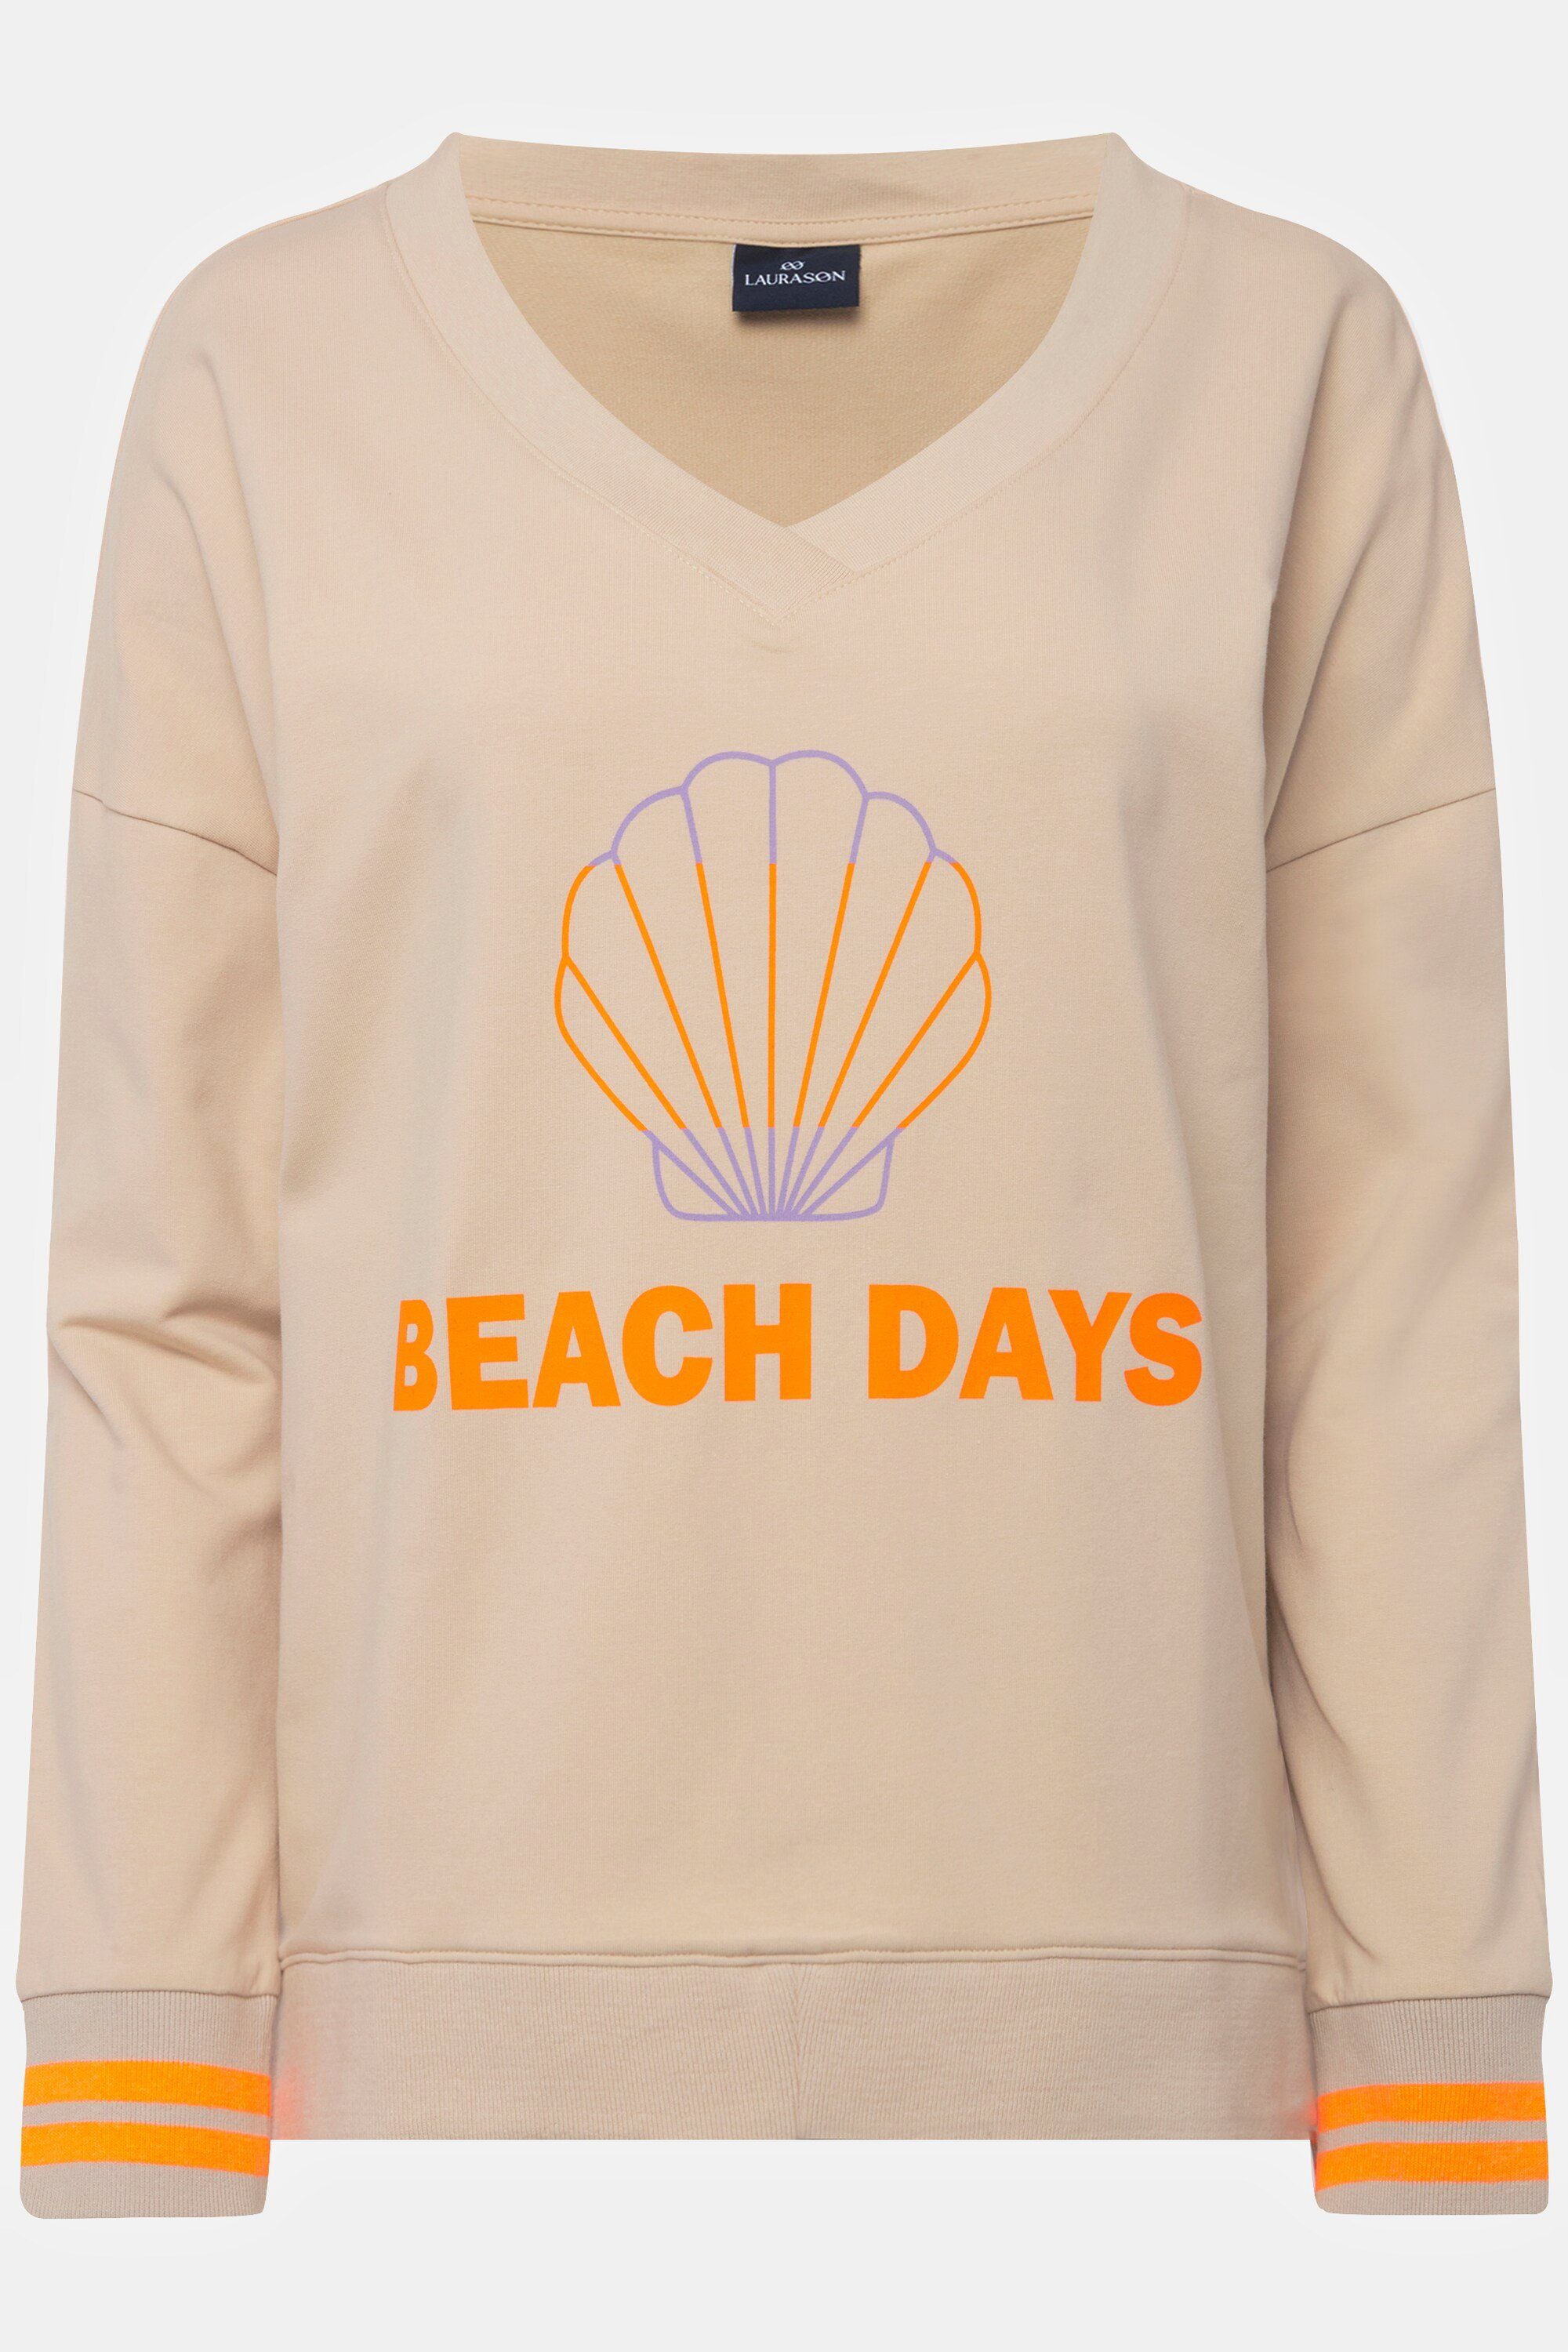 Laurasøn Sweatshirt Sweater BEACH Langarm Neon-Print V-Ausschnitt DAYS